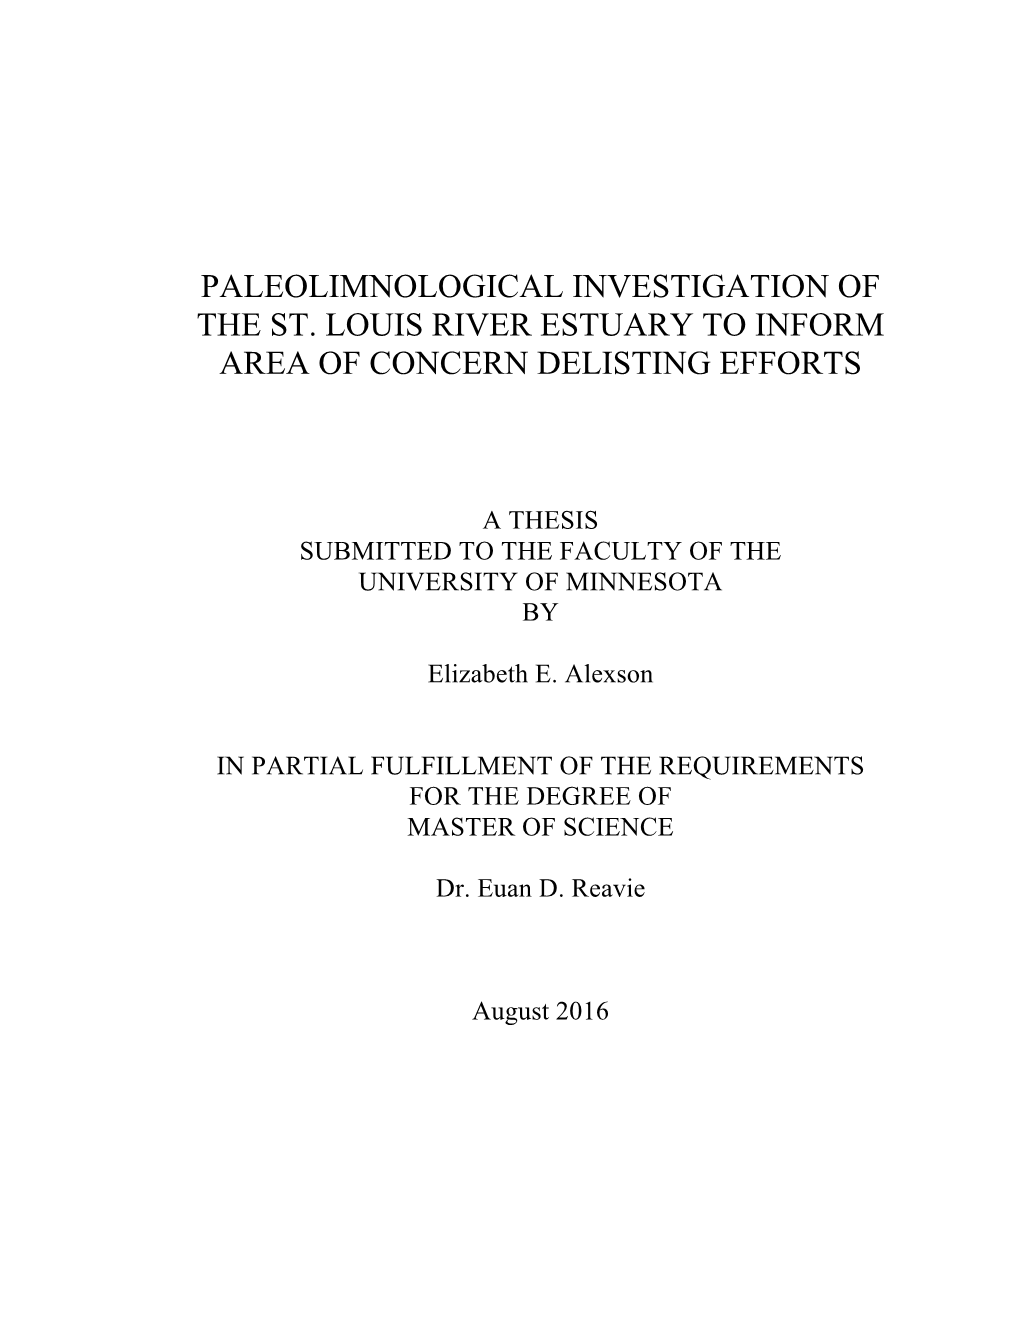 Paleolimnological Investigation of the St. Louis River Estuary to Inform Area of Concern Delisting Efforts